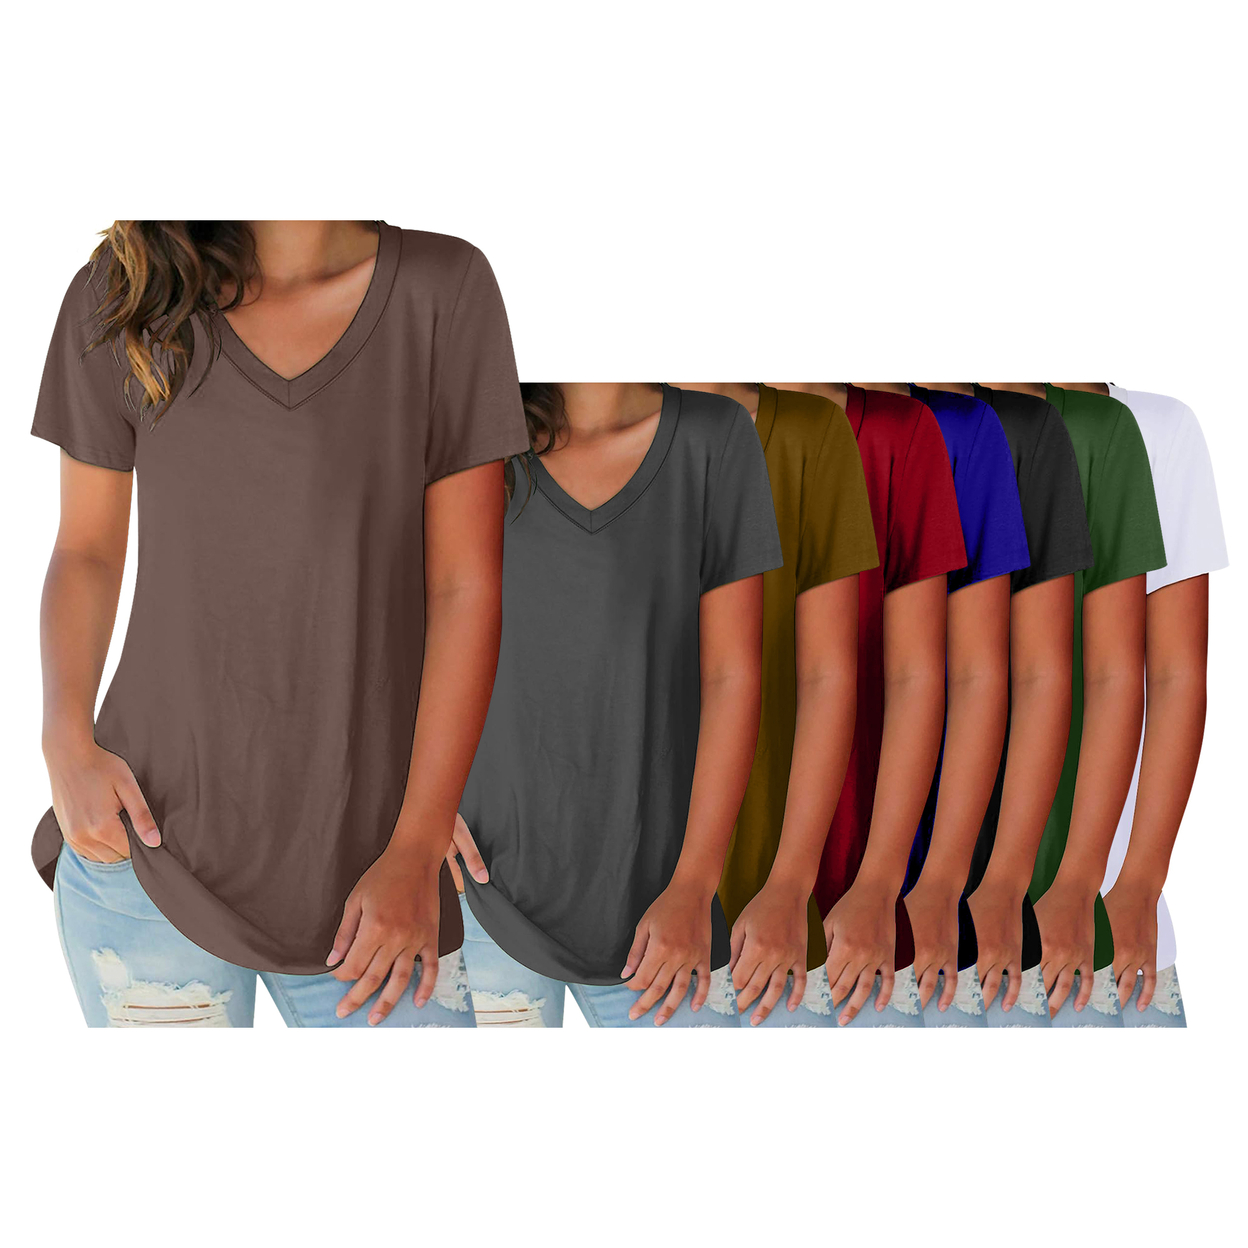 Women's Ultra-Soft Smooth Cotton Blend Basic V-Neck Short Sleeve Shirts - Brown, Large